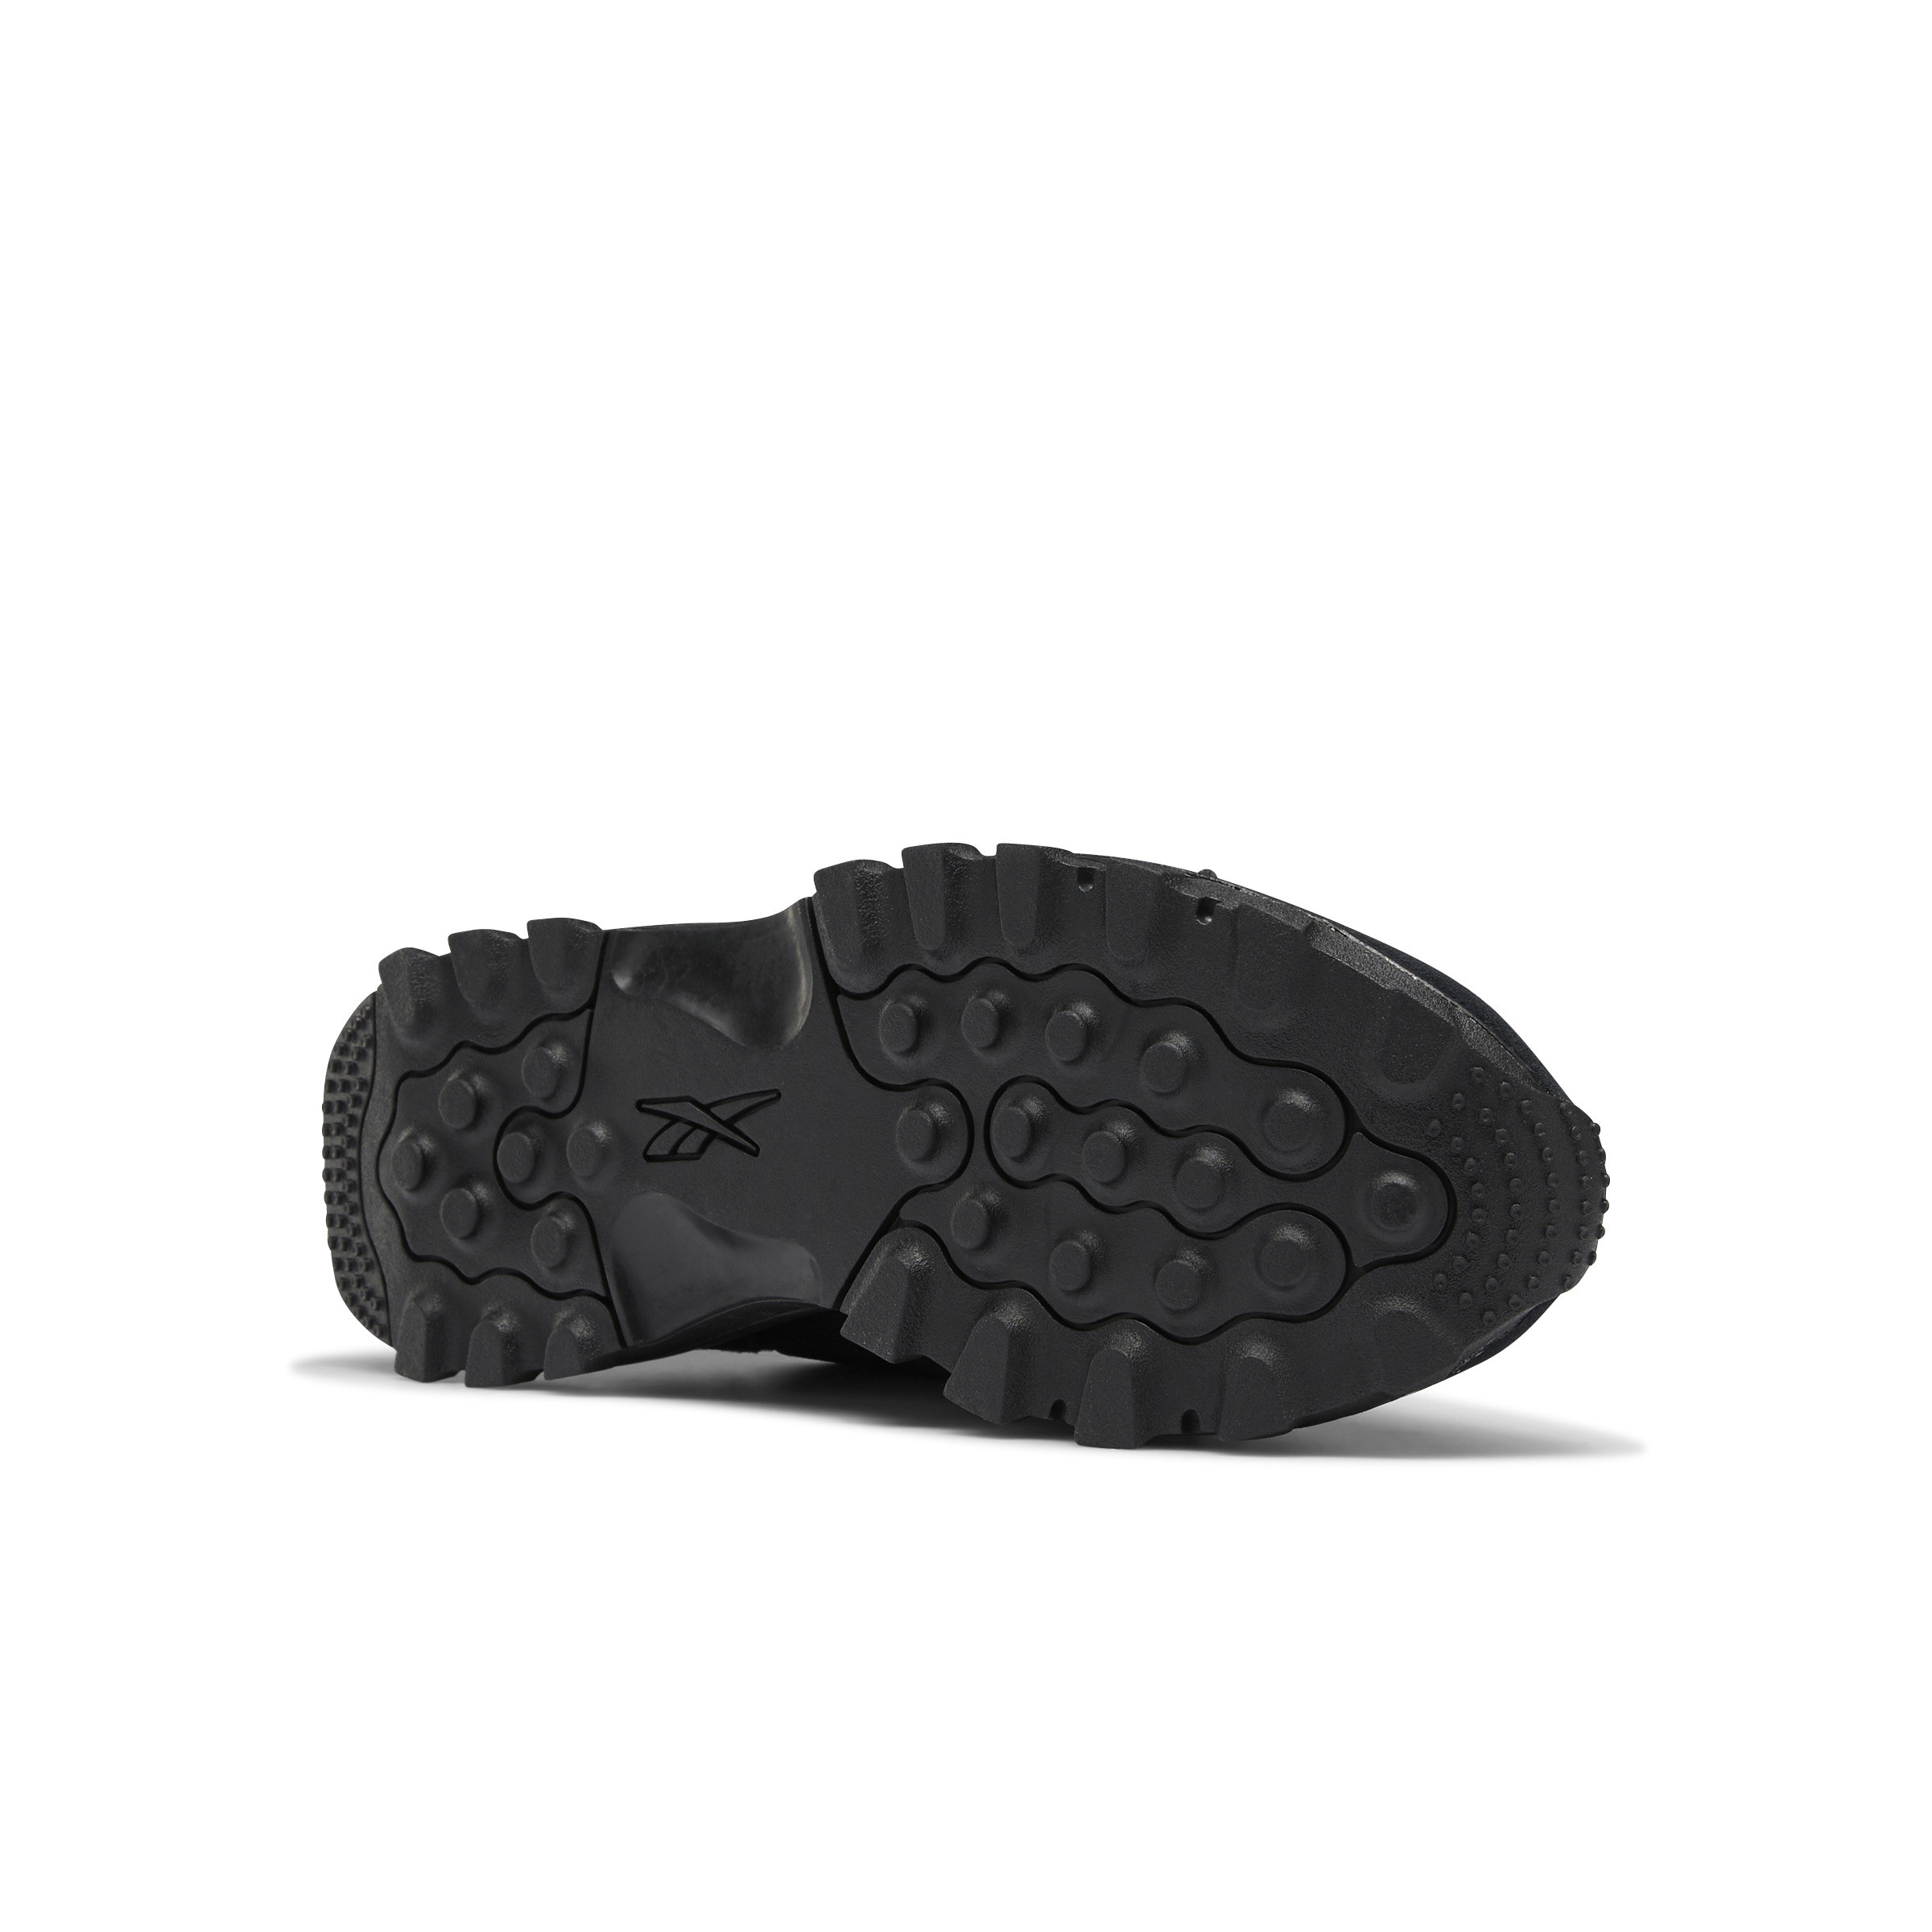 Classic Leather Cardi B V2 Shoes, Black, large image number 2